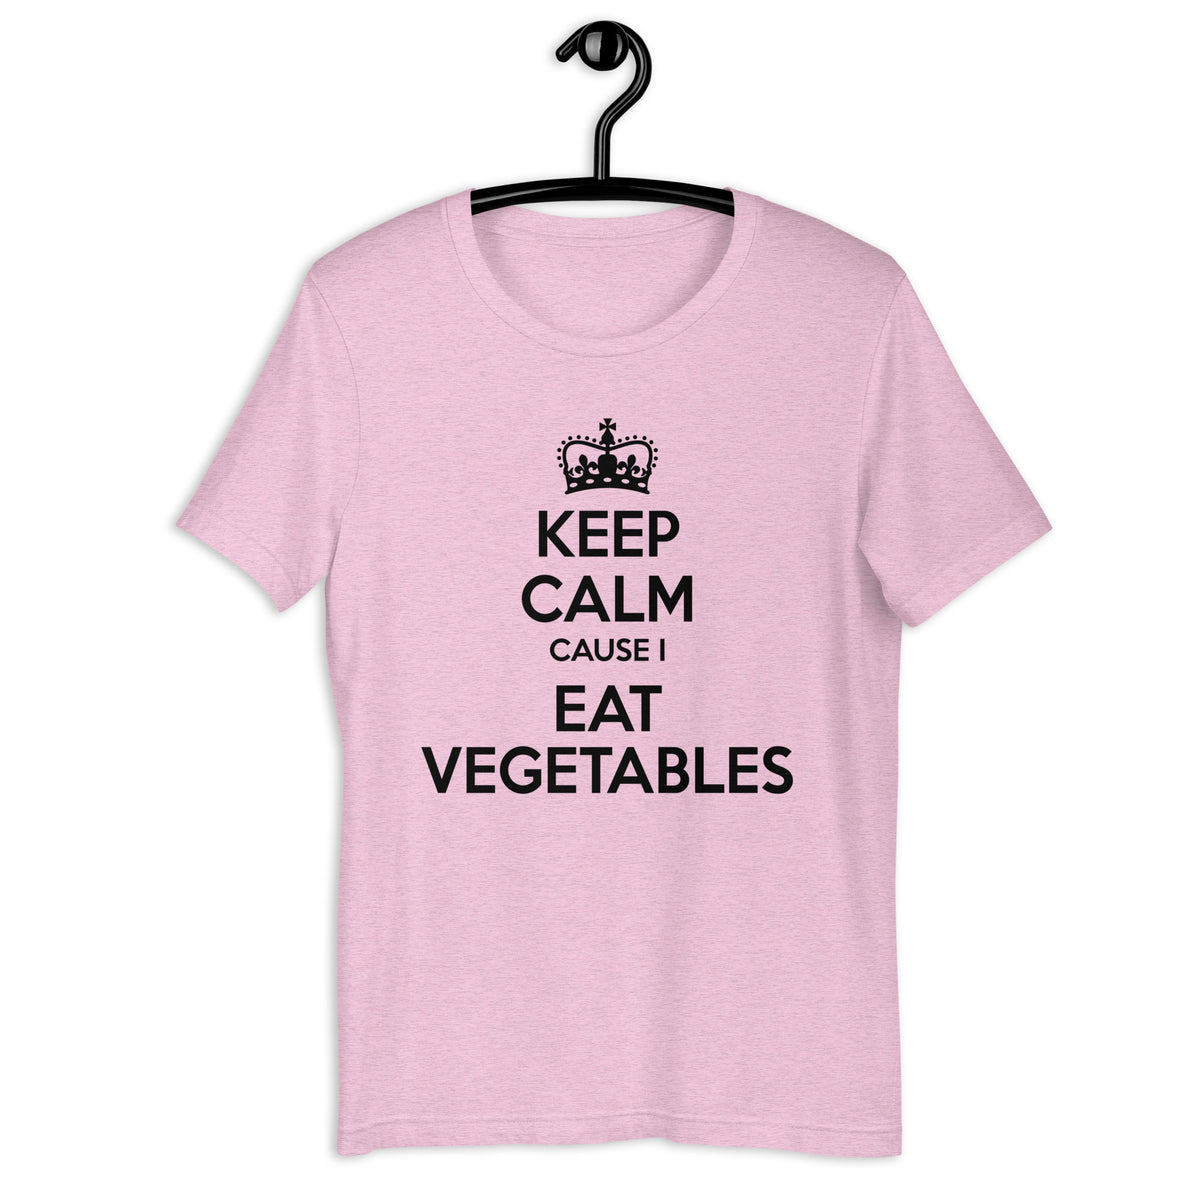 KEEP CALM I EAT VEGETABLES t-shirt